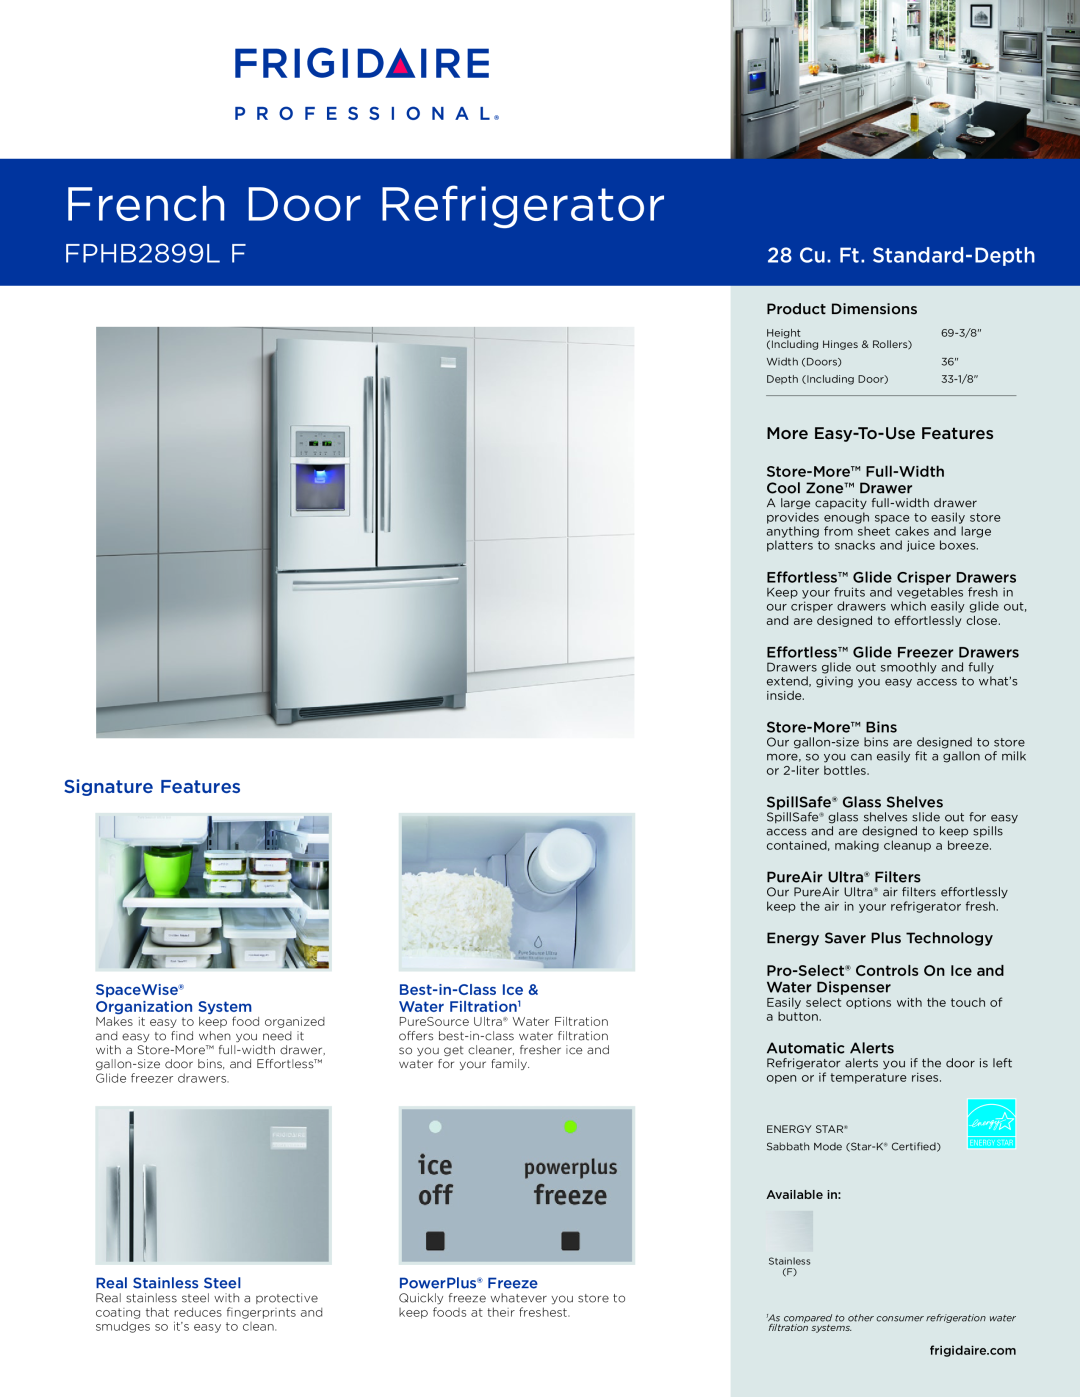 Frigidaire FPHB2899LF dimensions French Door Refrigerator, FPHB2899L F, 28 Cu. Ft. Standard-Depth, Signature Features 